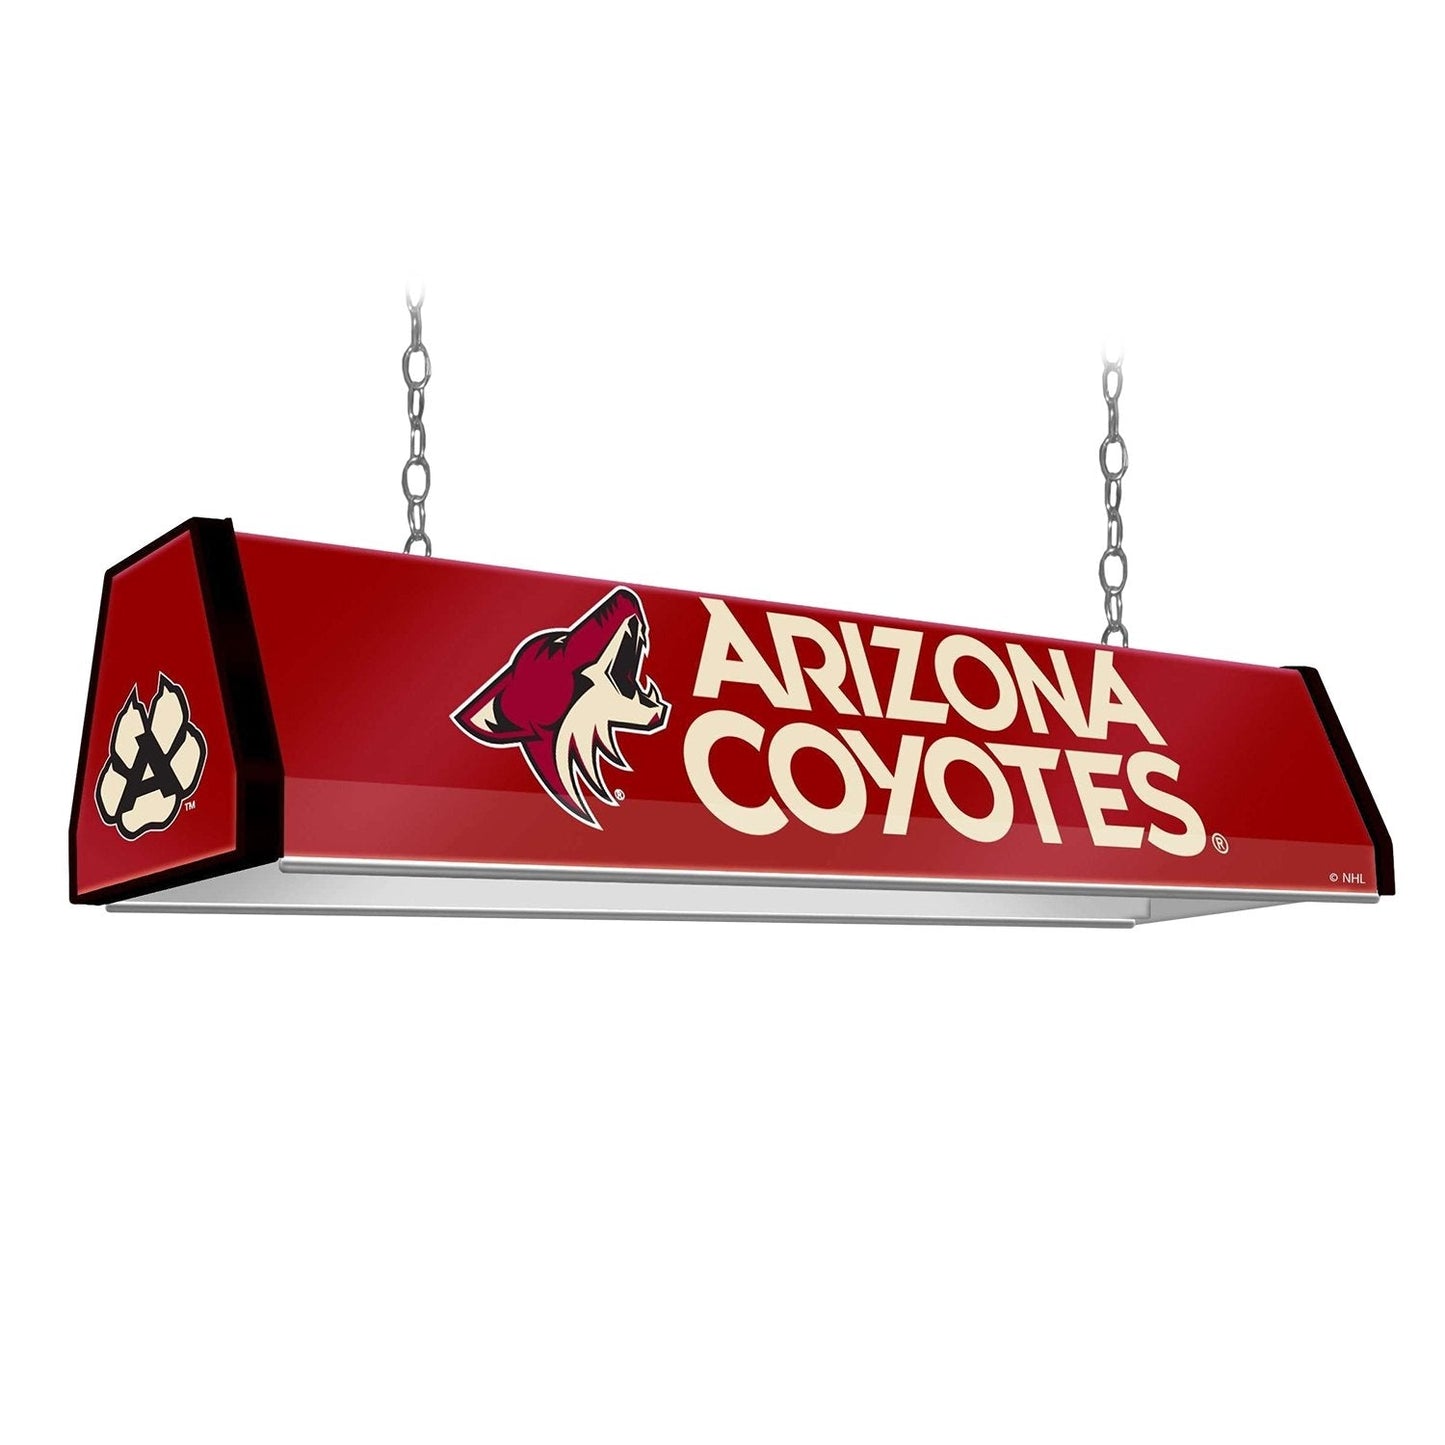 Arizona Coyotes: Standard Pool Table Light - The Fan-Brand